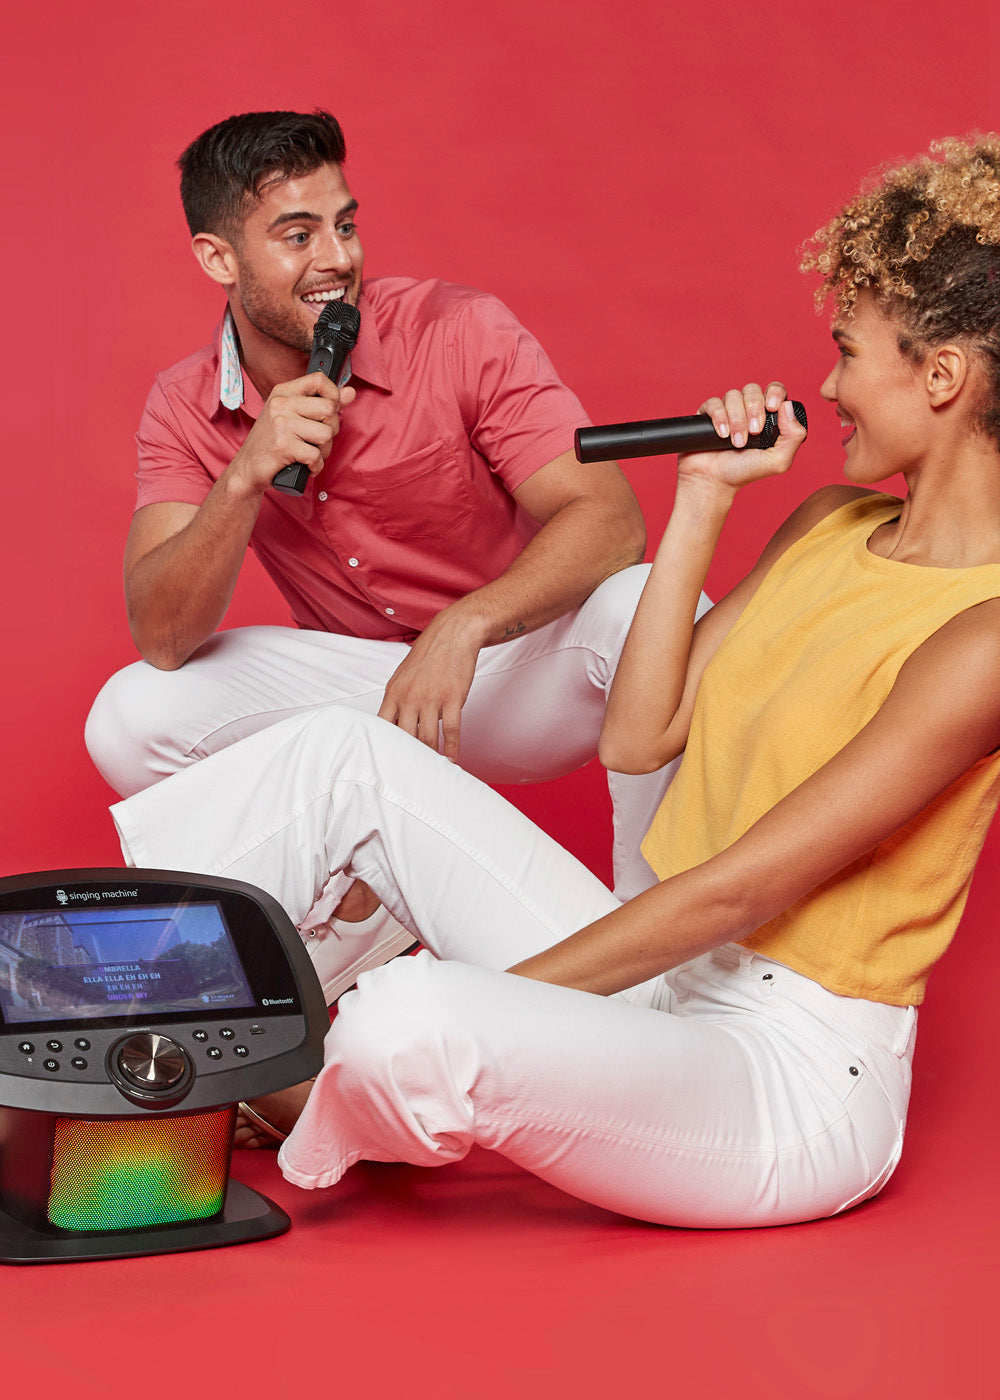 The 4 Best Karaoke Machines for 2024